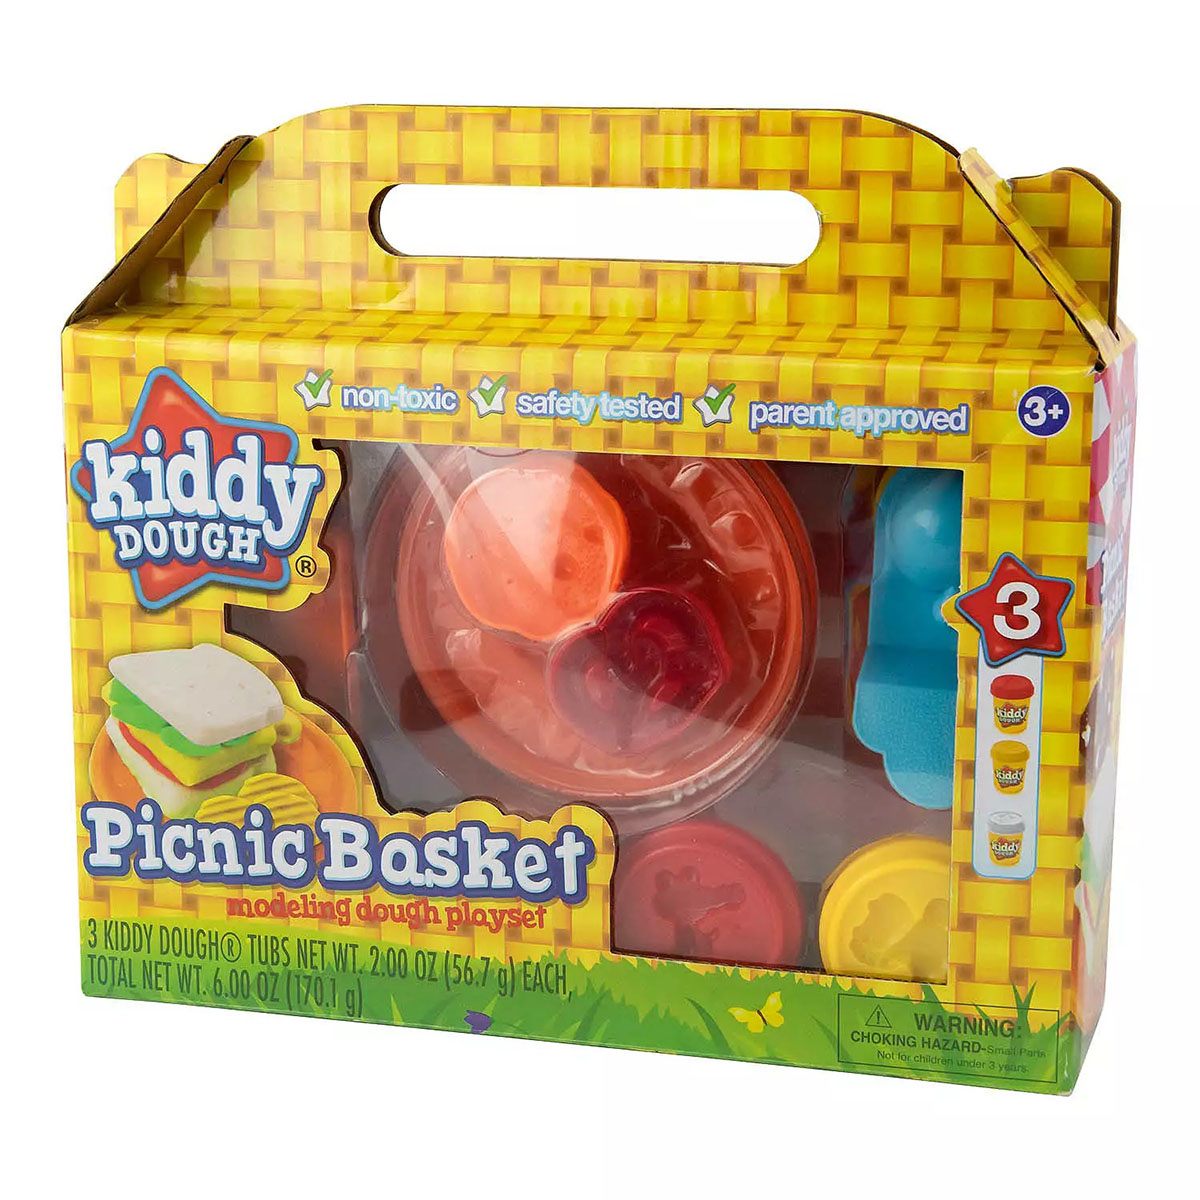 Kiddy Dough(R) Picnic Basket Modeling Dough Playset